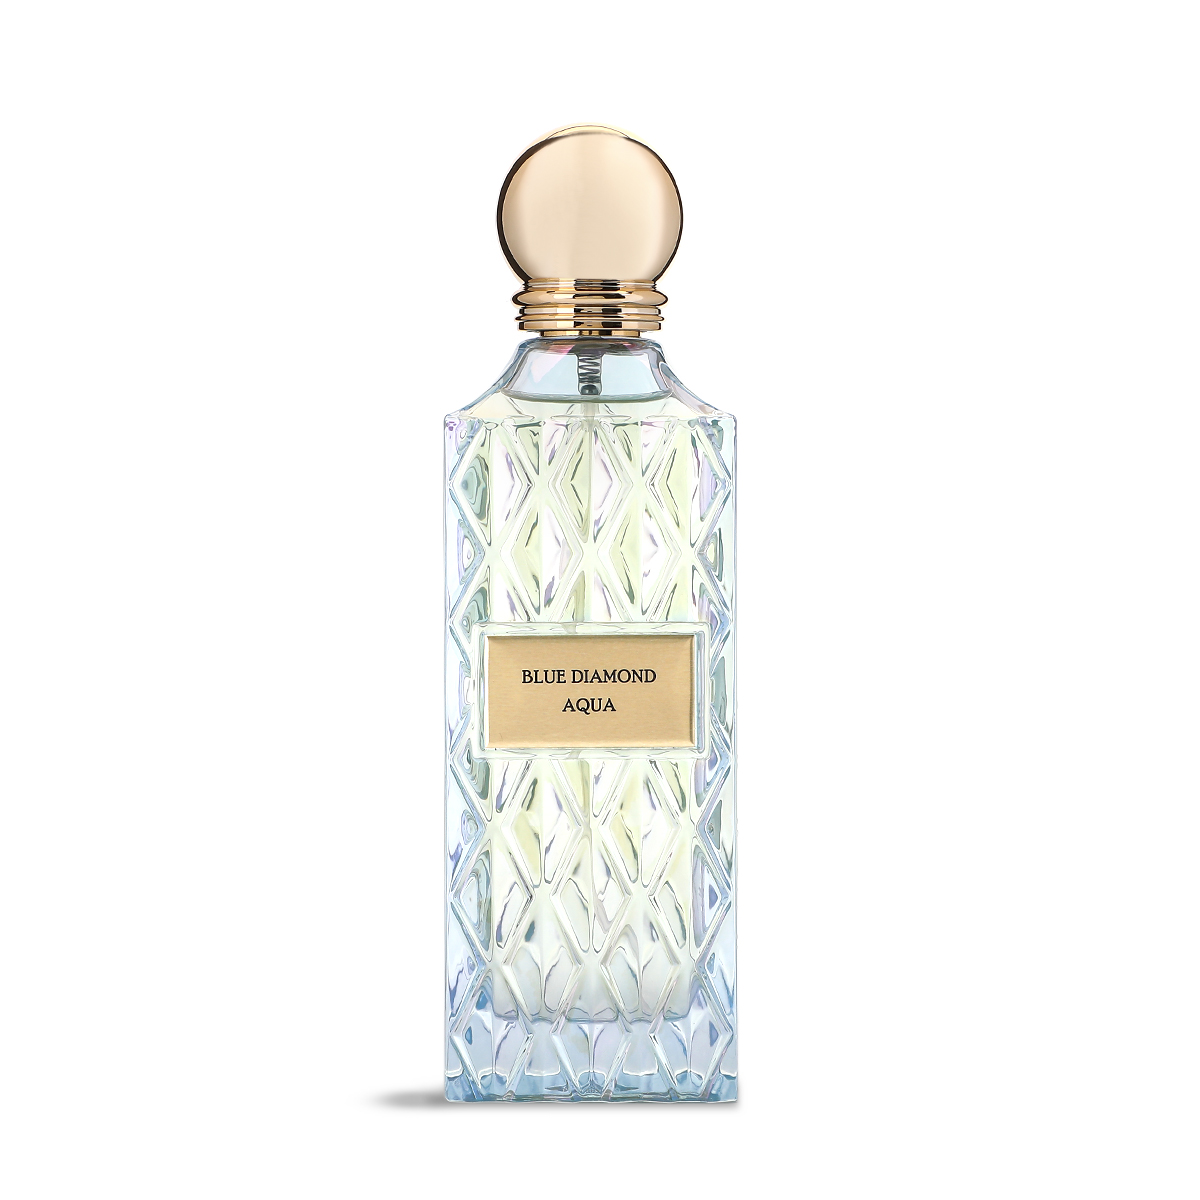 Buy Blue Diamond Aqua Eau de Parfum - 200ml Online in Kuwait | Boutiqaat